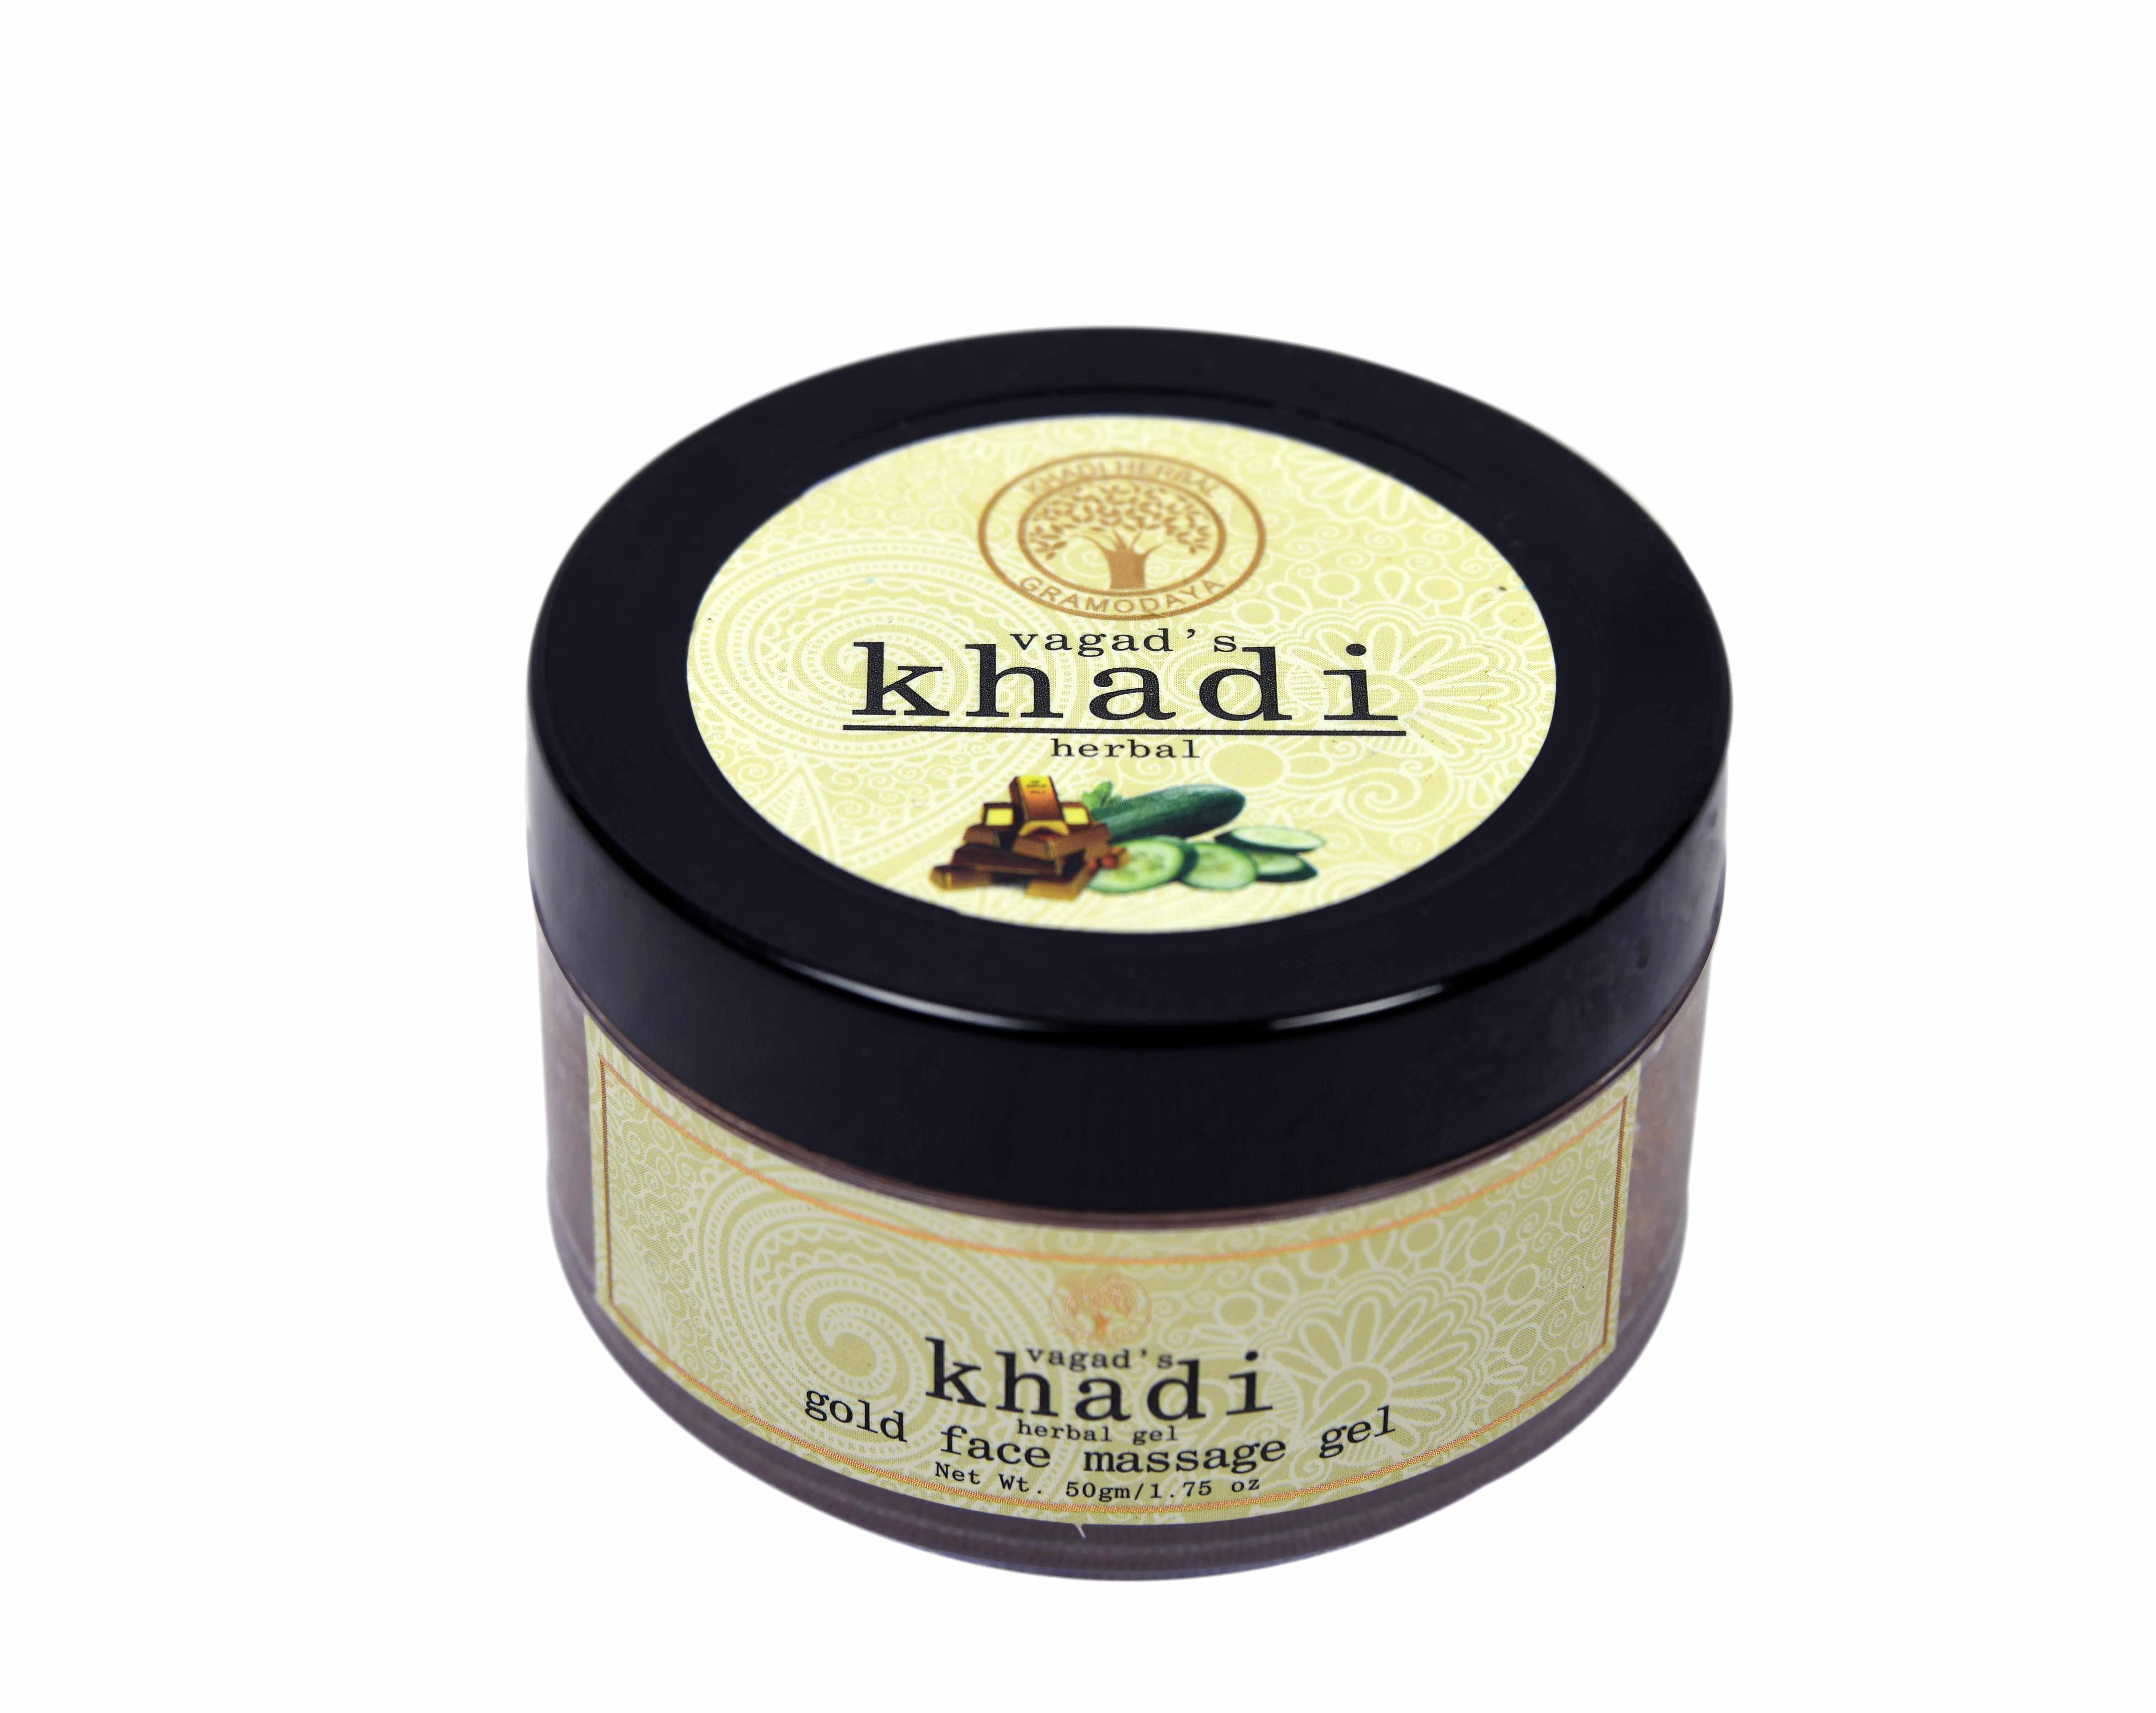 Vagad's Khadi Gold Face Massage Gel